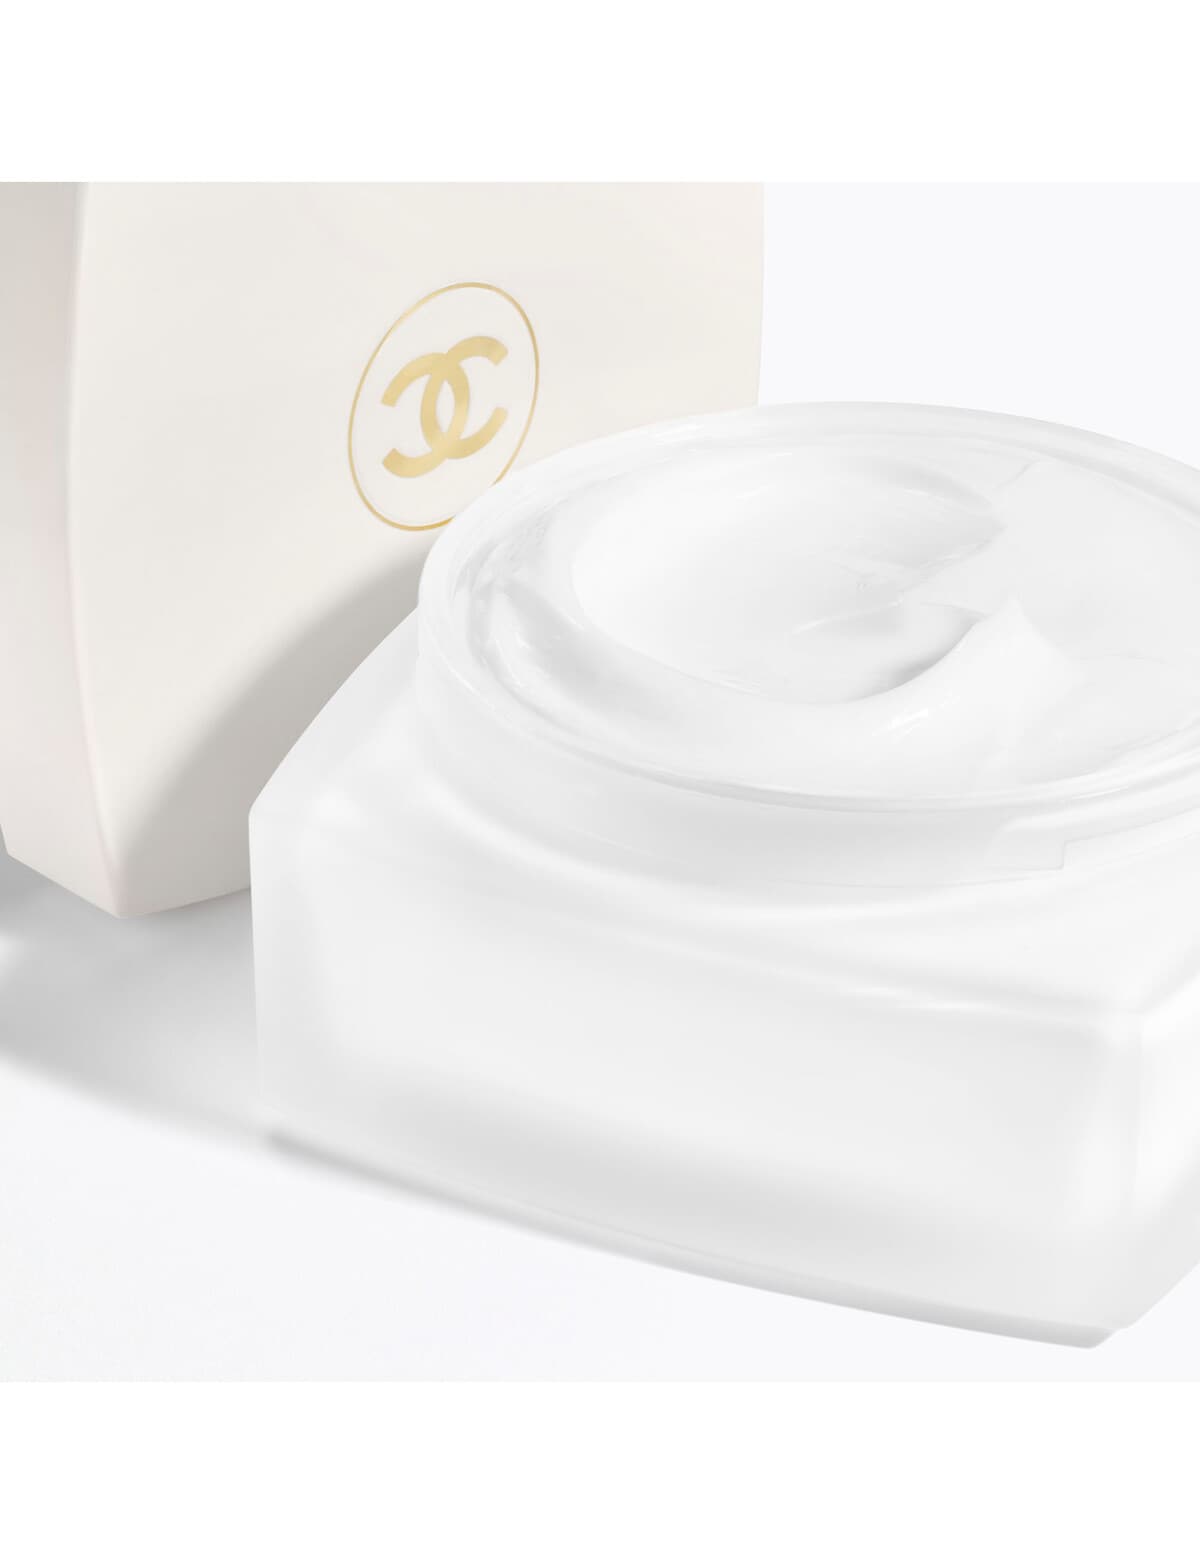 No. 5 by Chanel Velvet Body Cream 150ml by Chanel - Shop Online for Beauty  in Australia